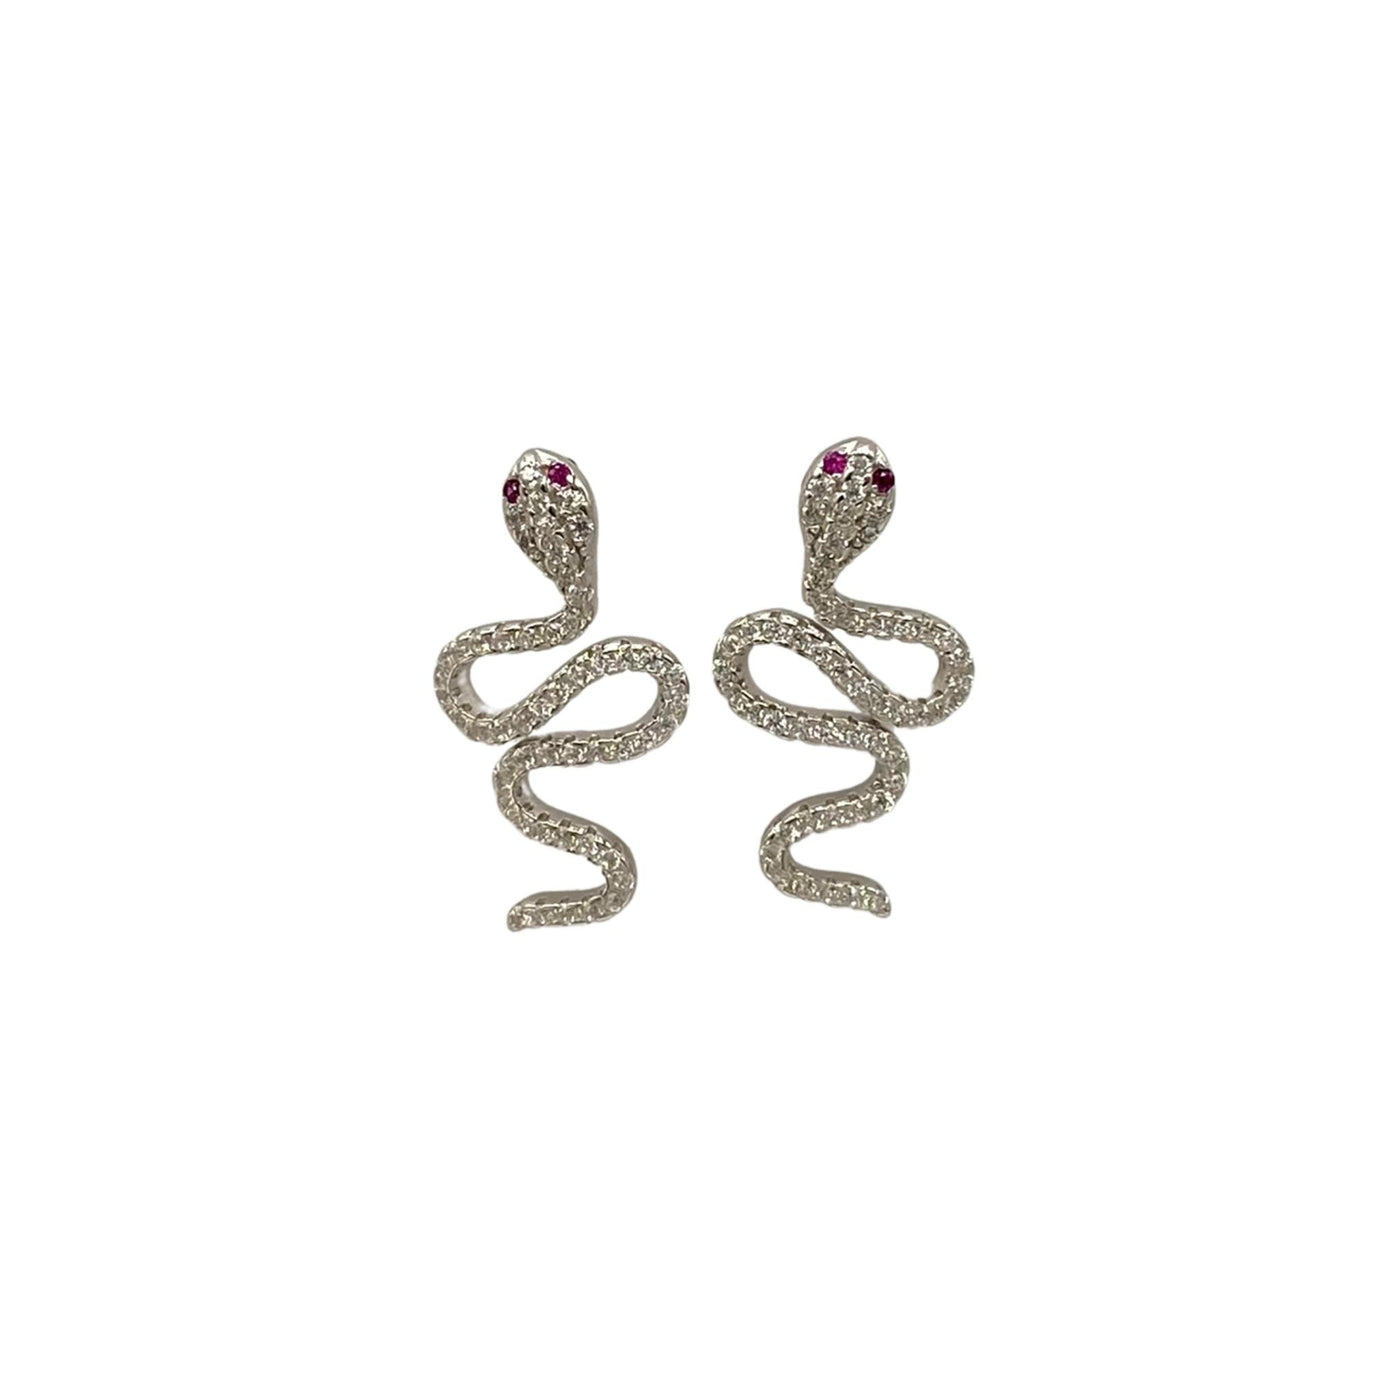 Silver snake earrings with zirconia